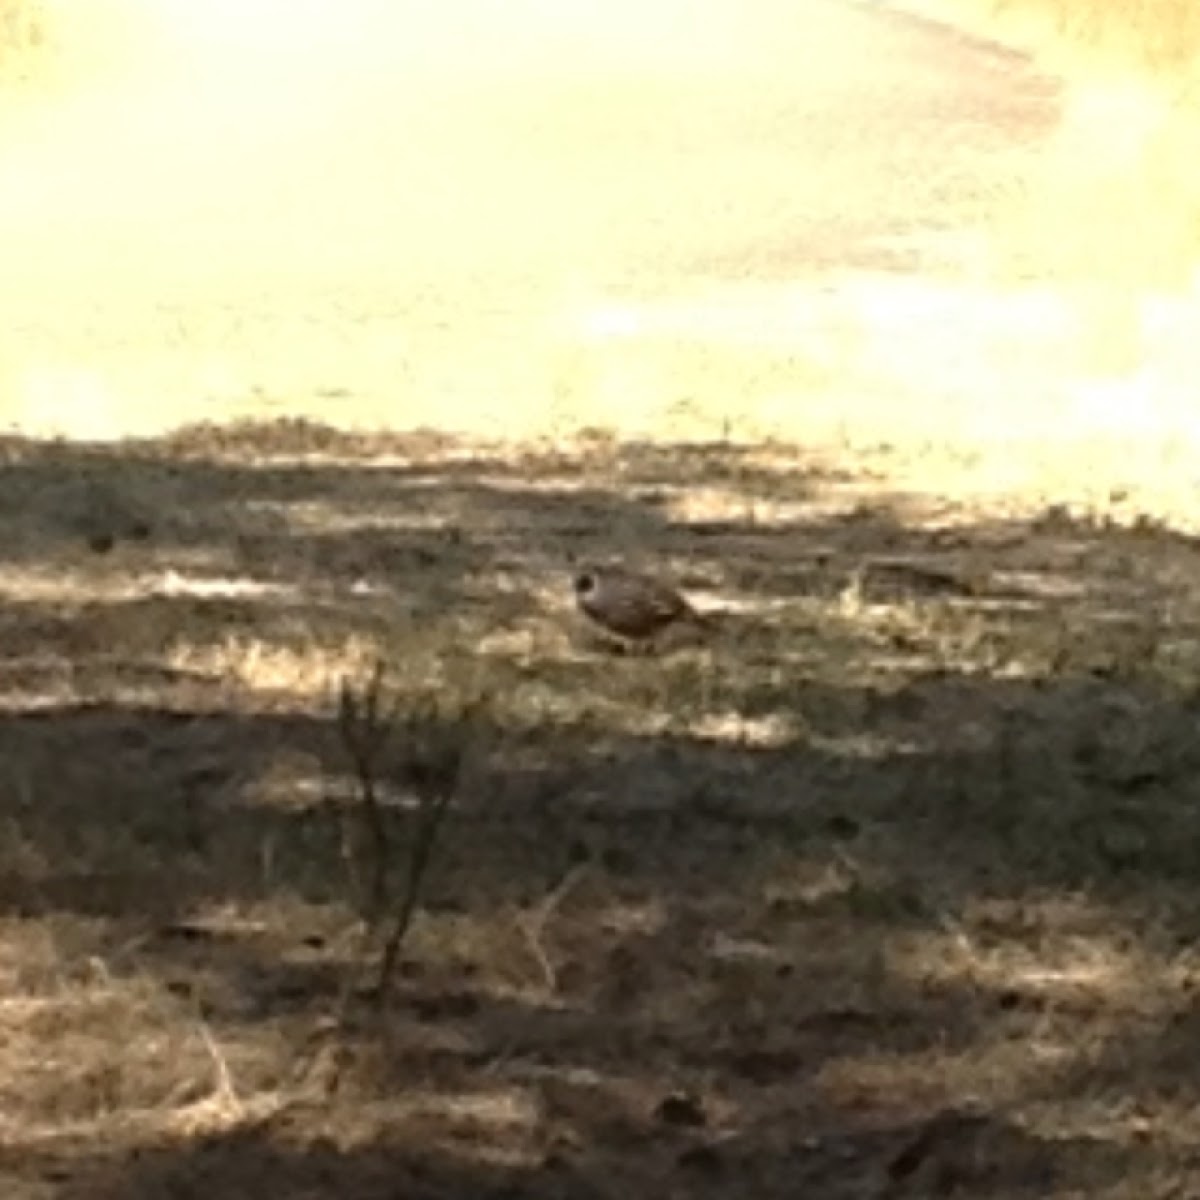 California quail